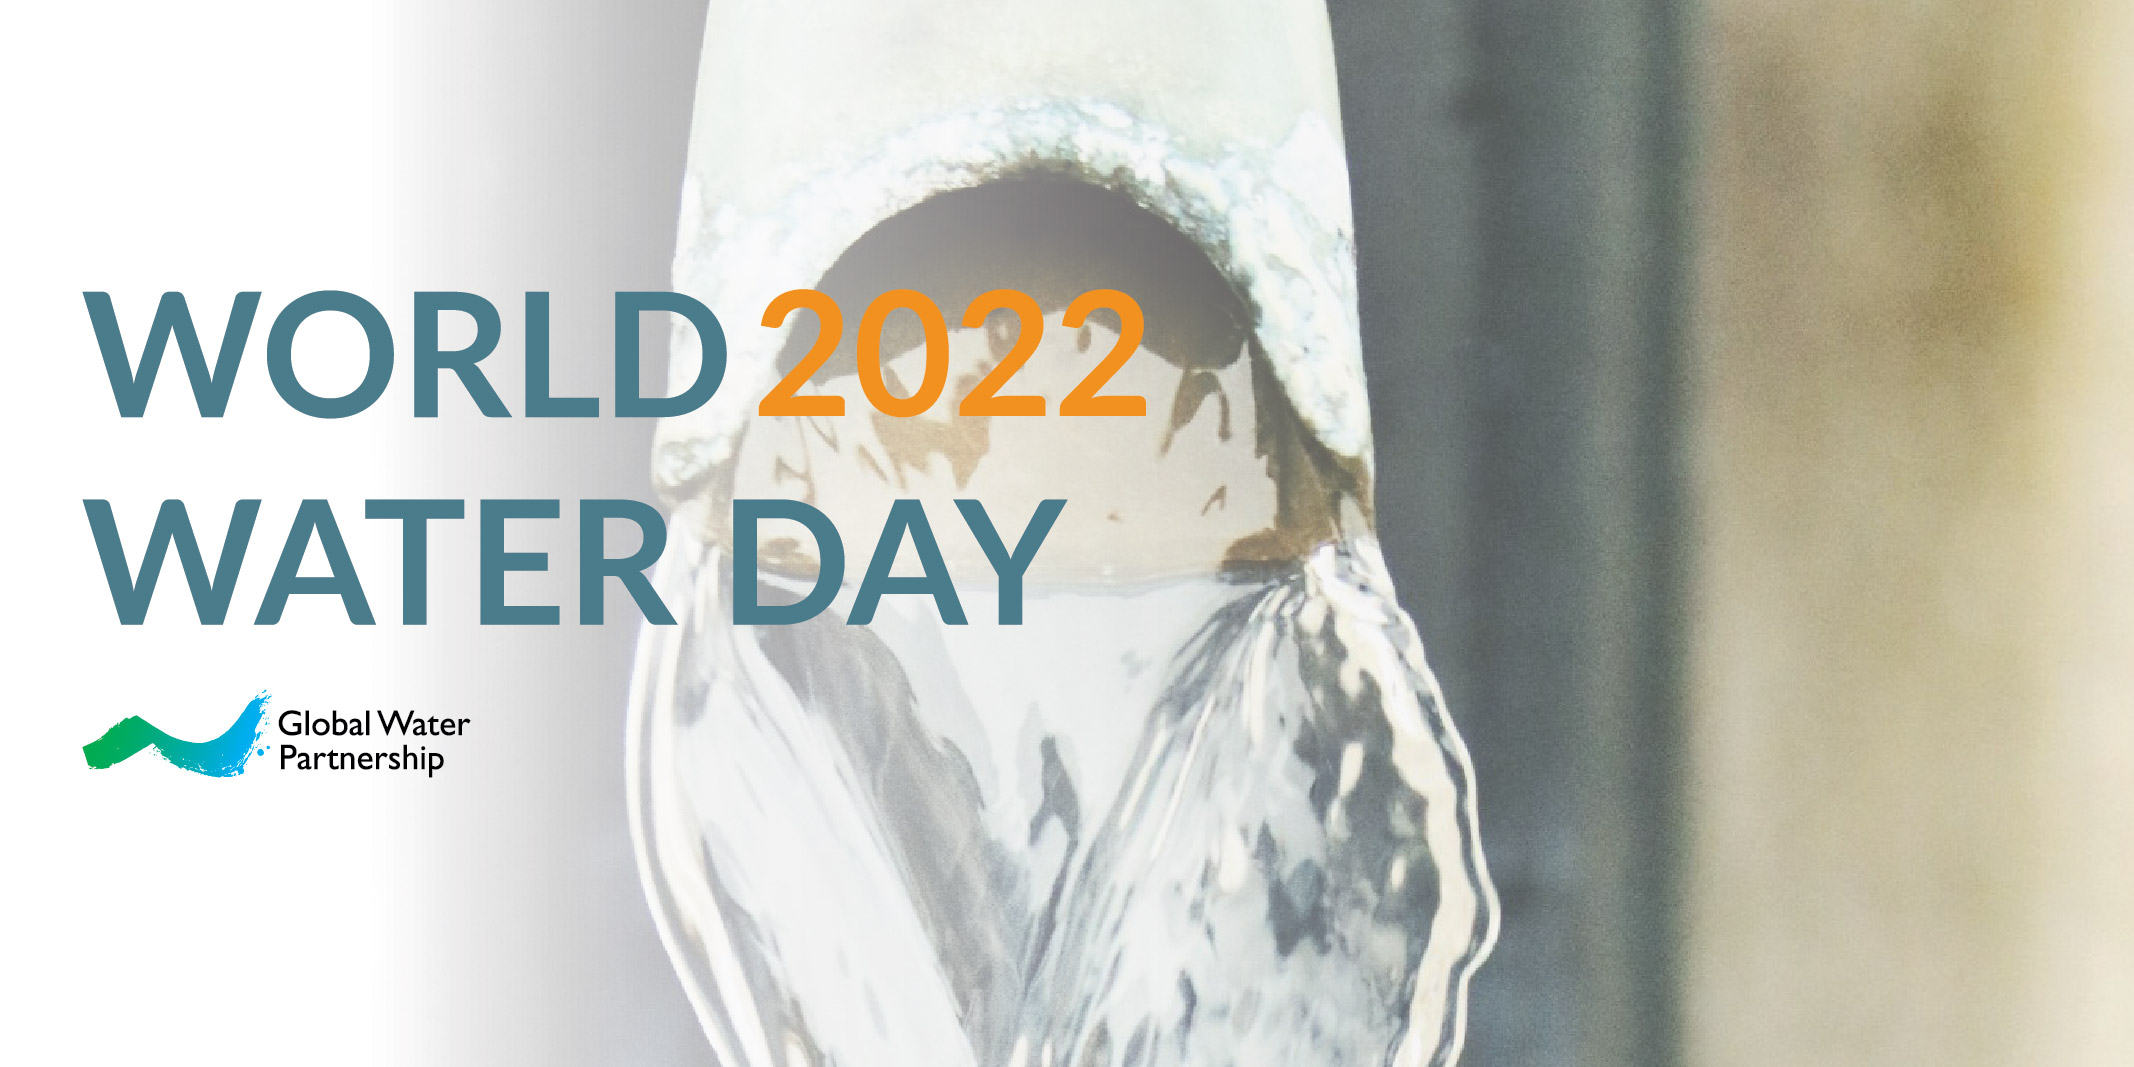 DarÃ­o Soto-Abril, World Water Day 2022 Message